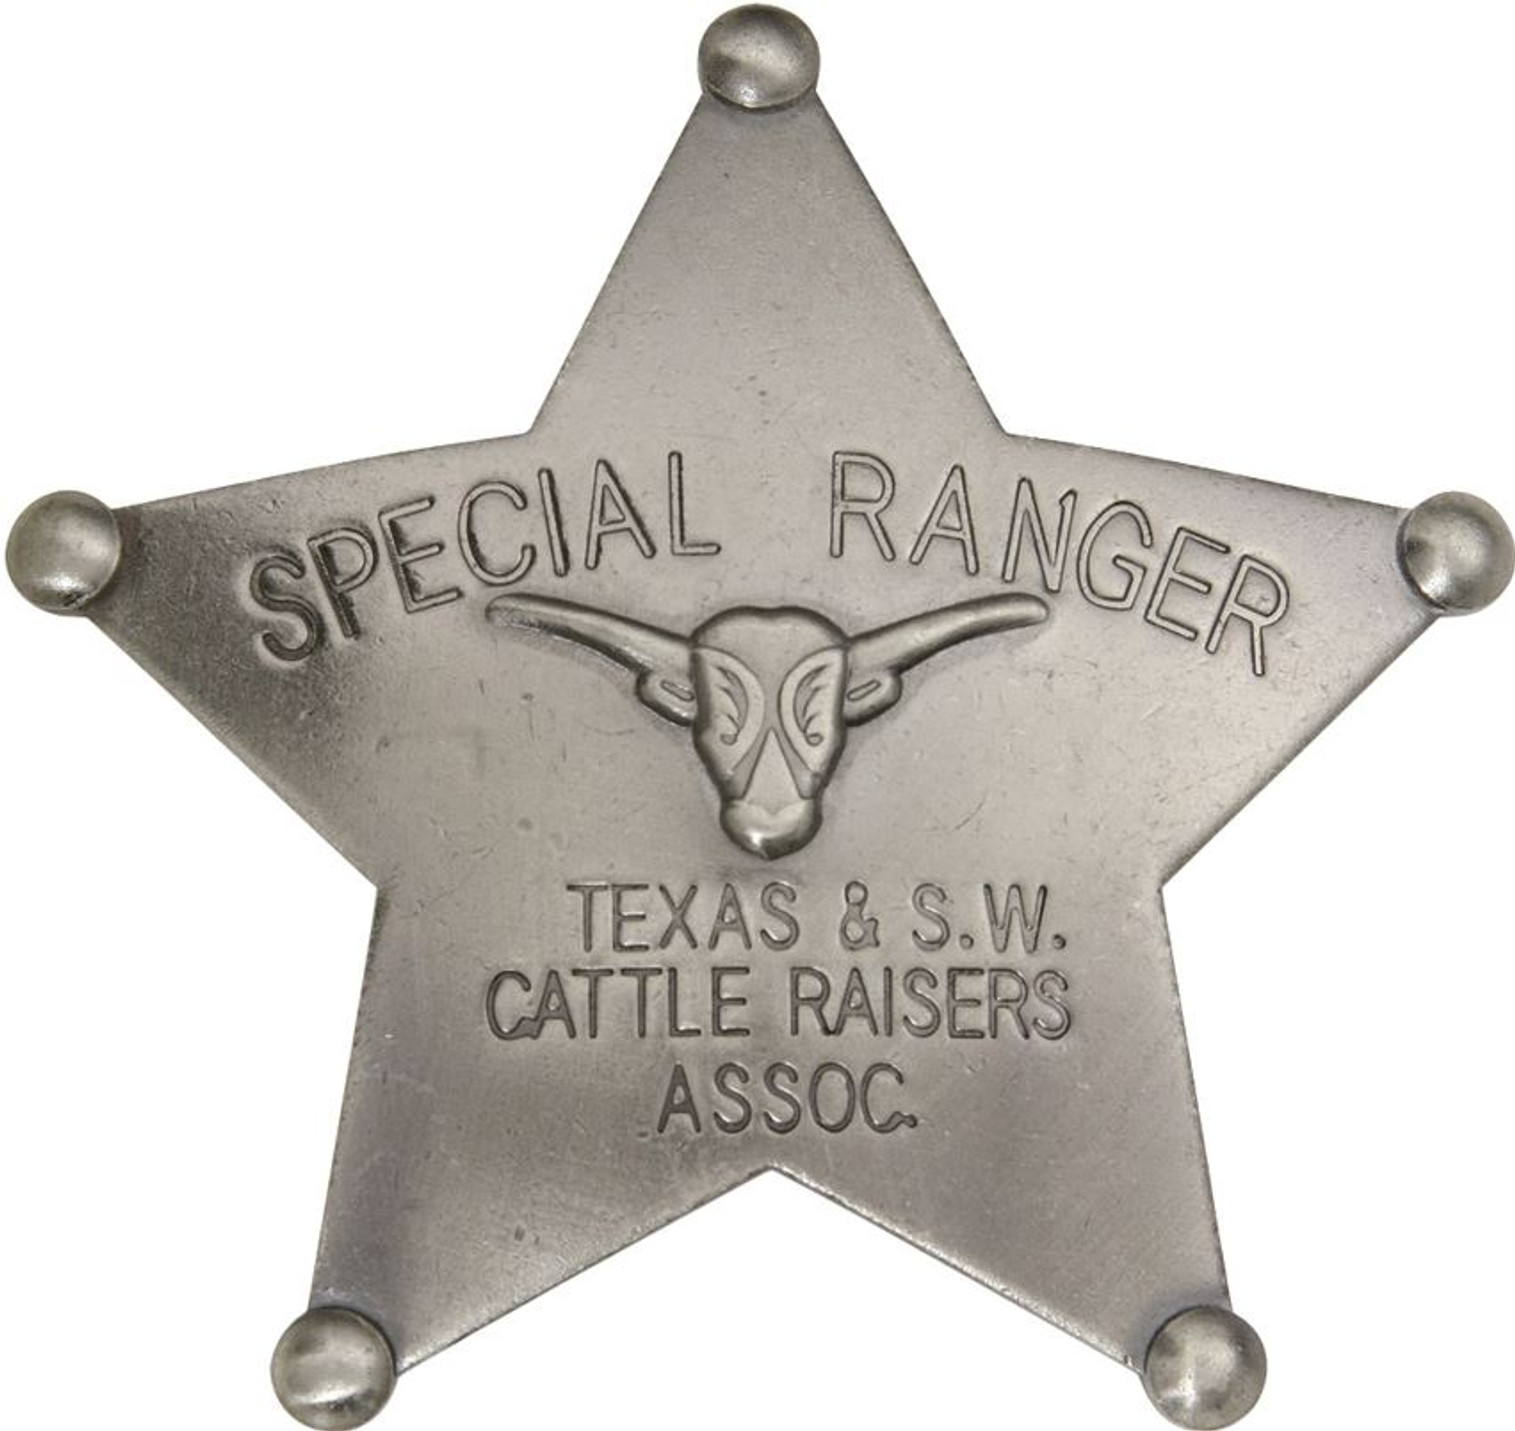 BOTOW Special Ranger Badge